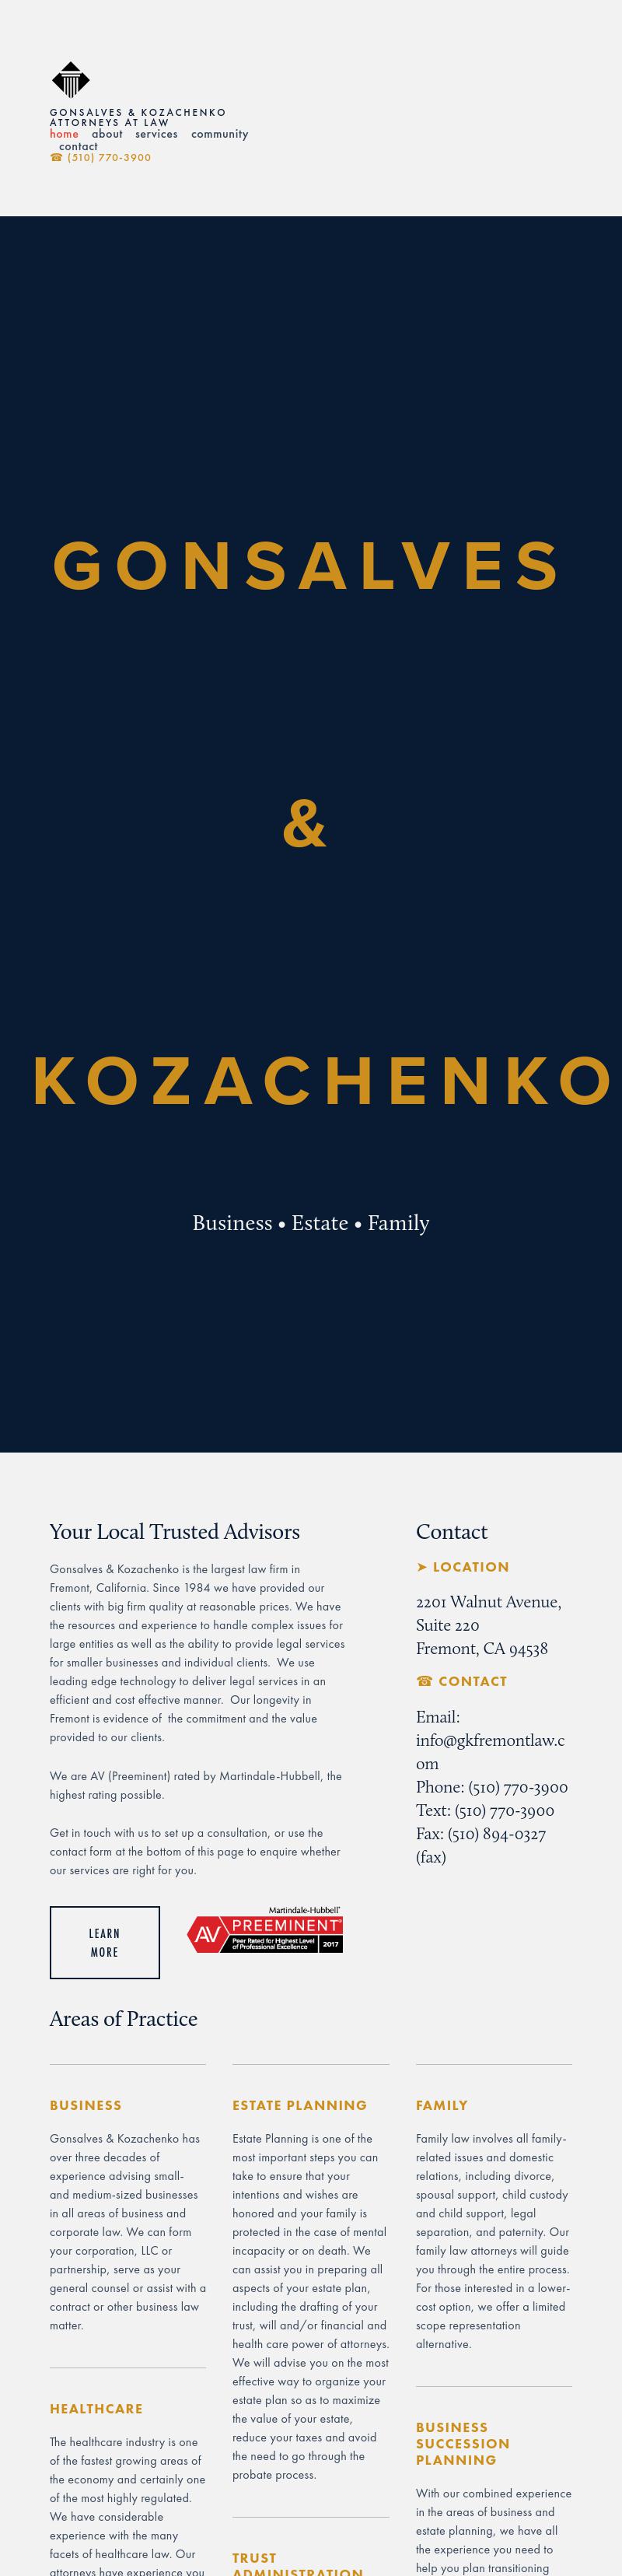 Gonsalves & Kozachenko Law Offices - Fremont CA Lawyers